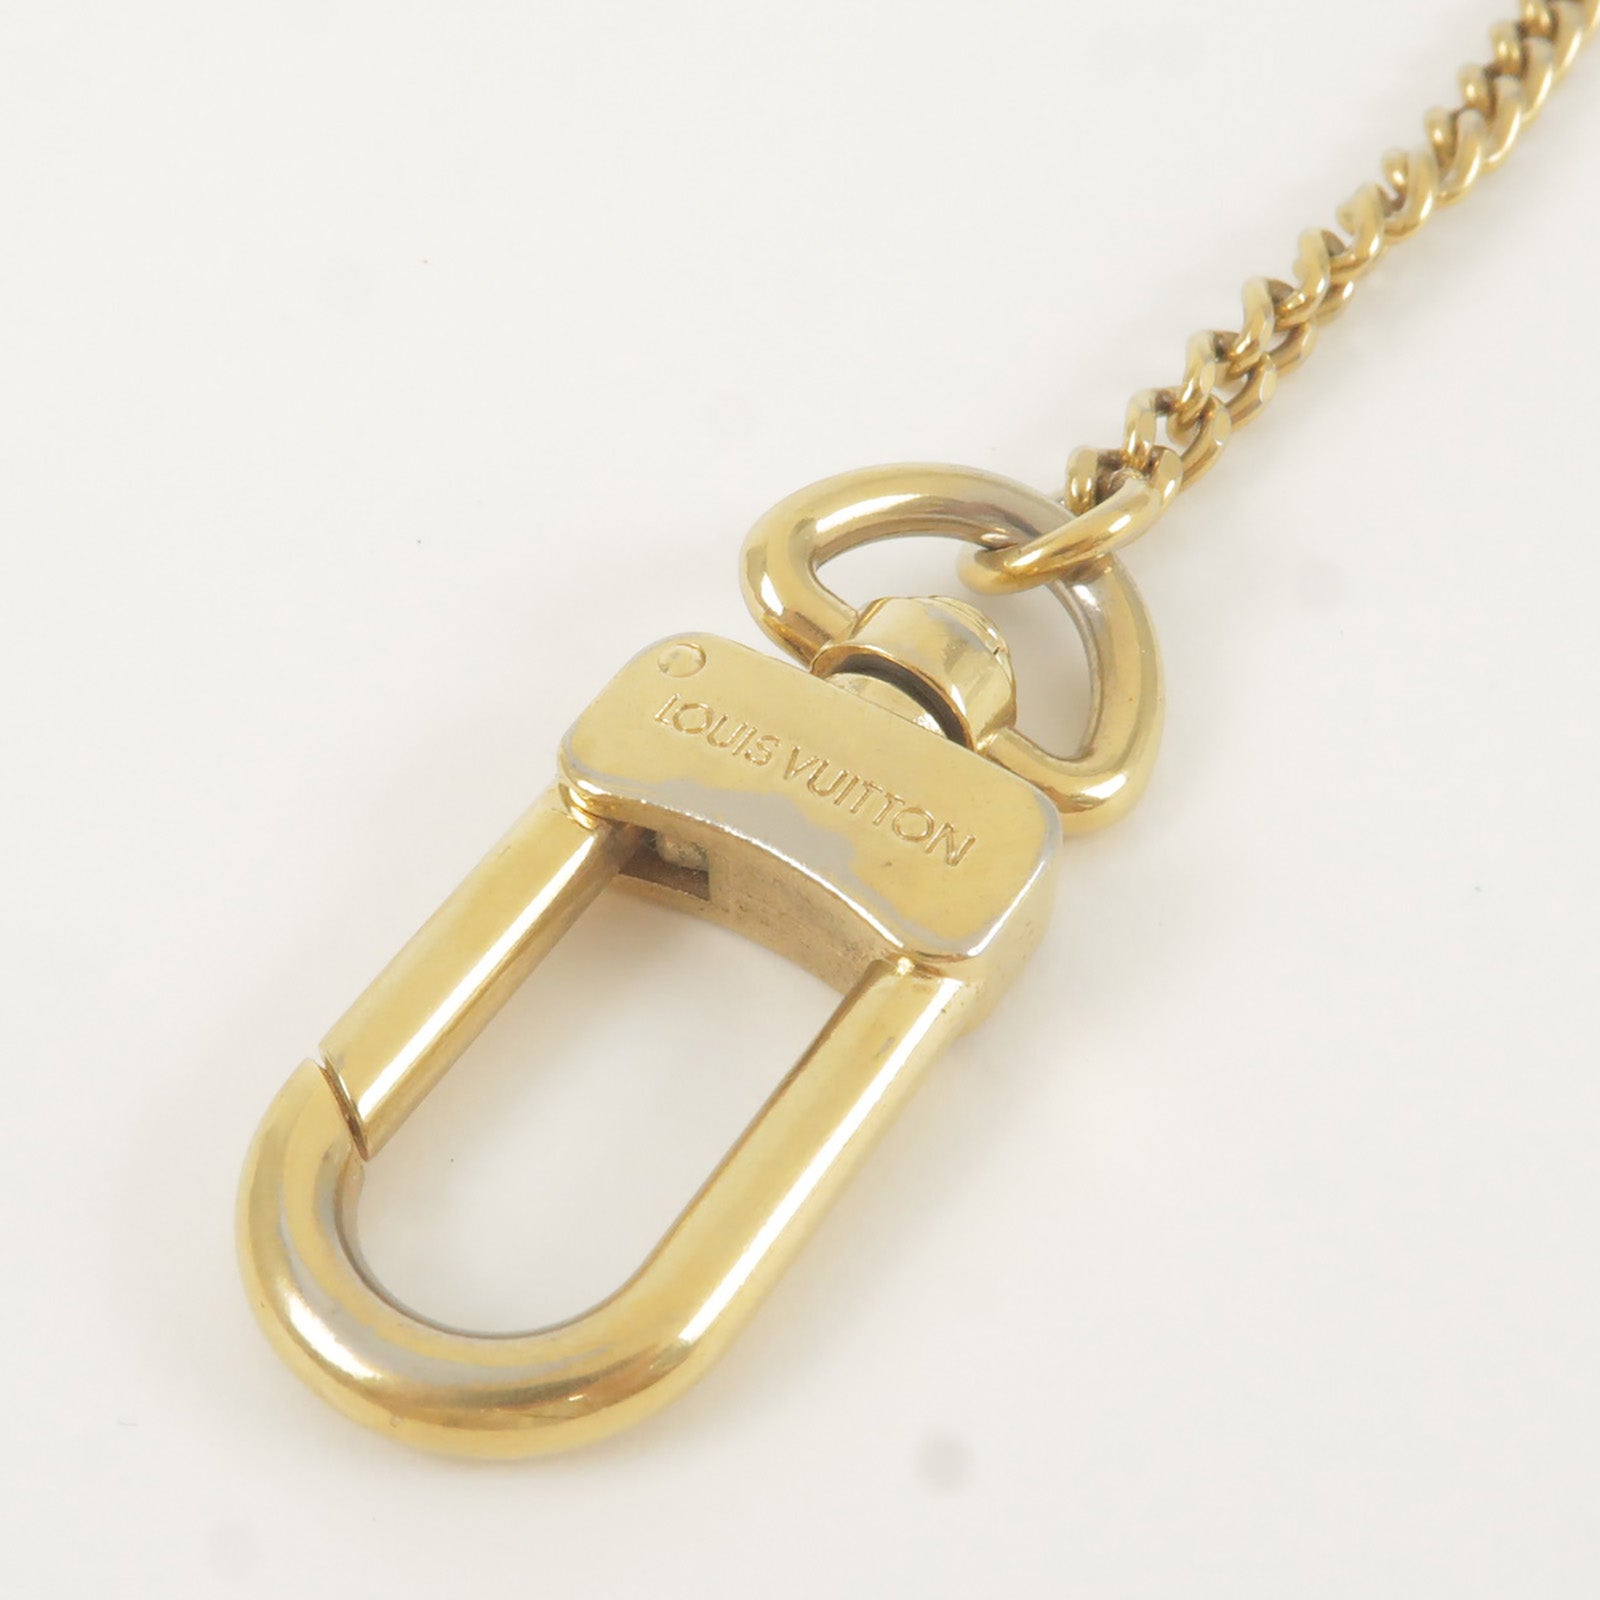 louis-vuitton key chain gold